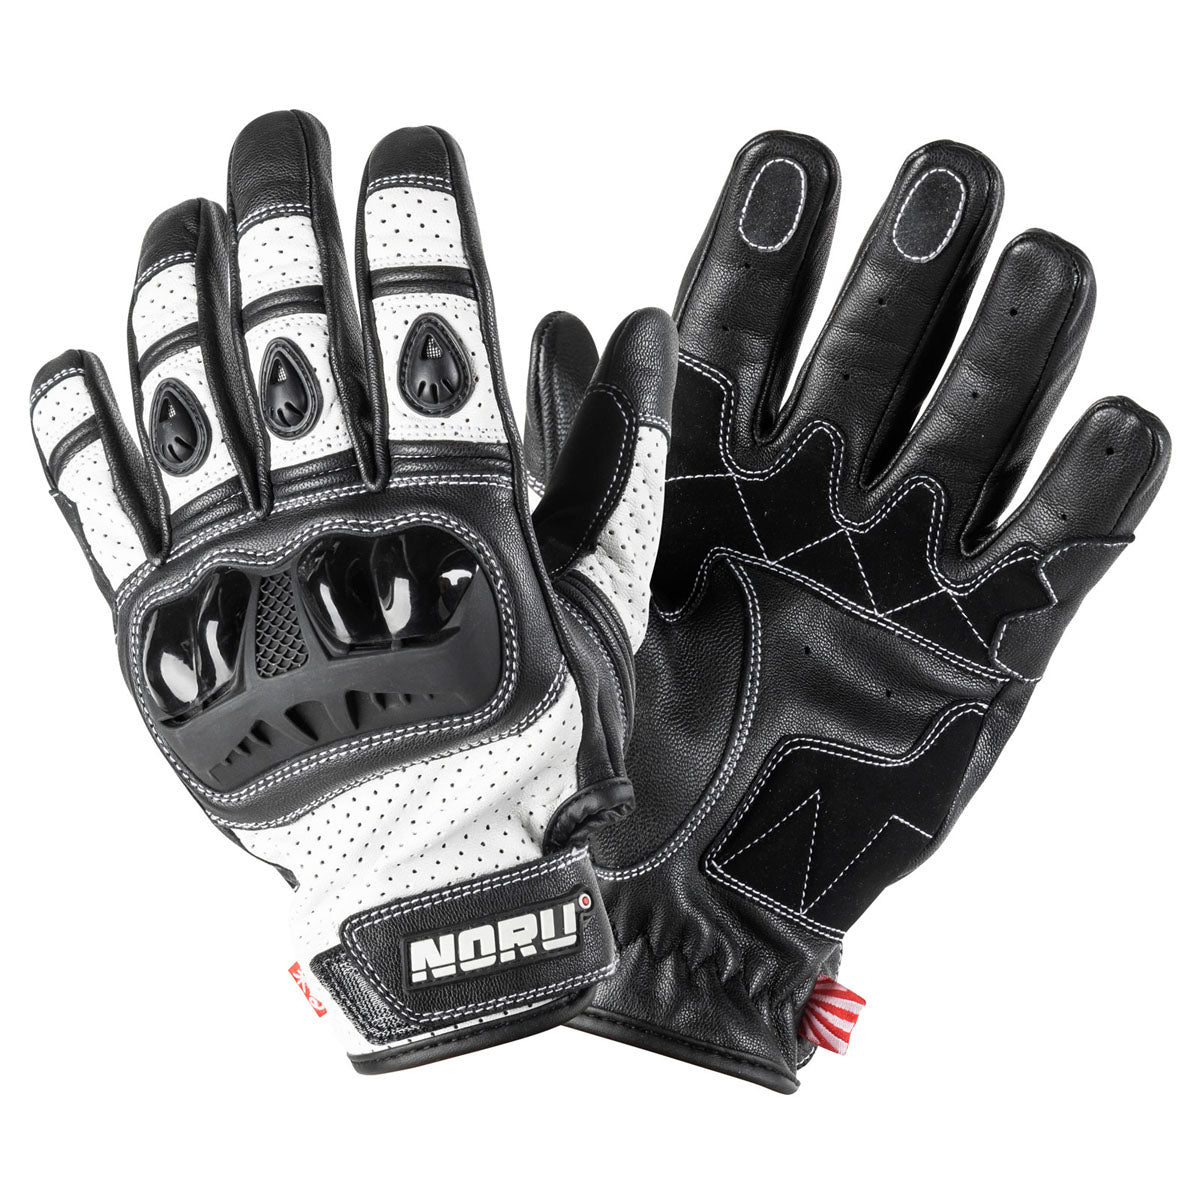 Noru Furo Gloves - ExtremeSupply.com